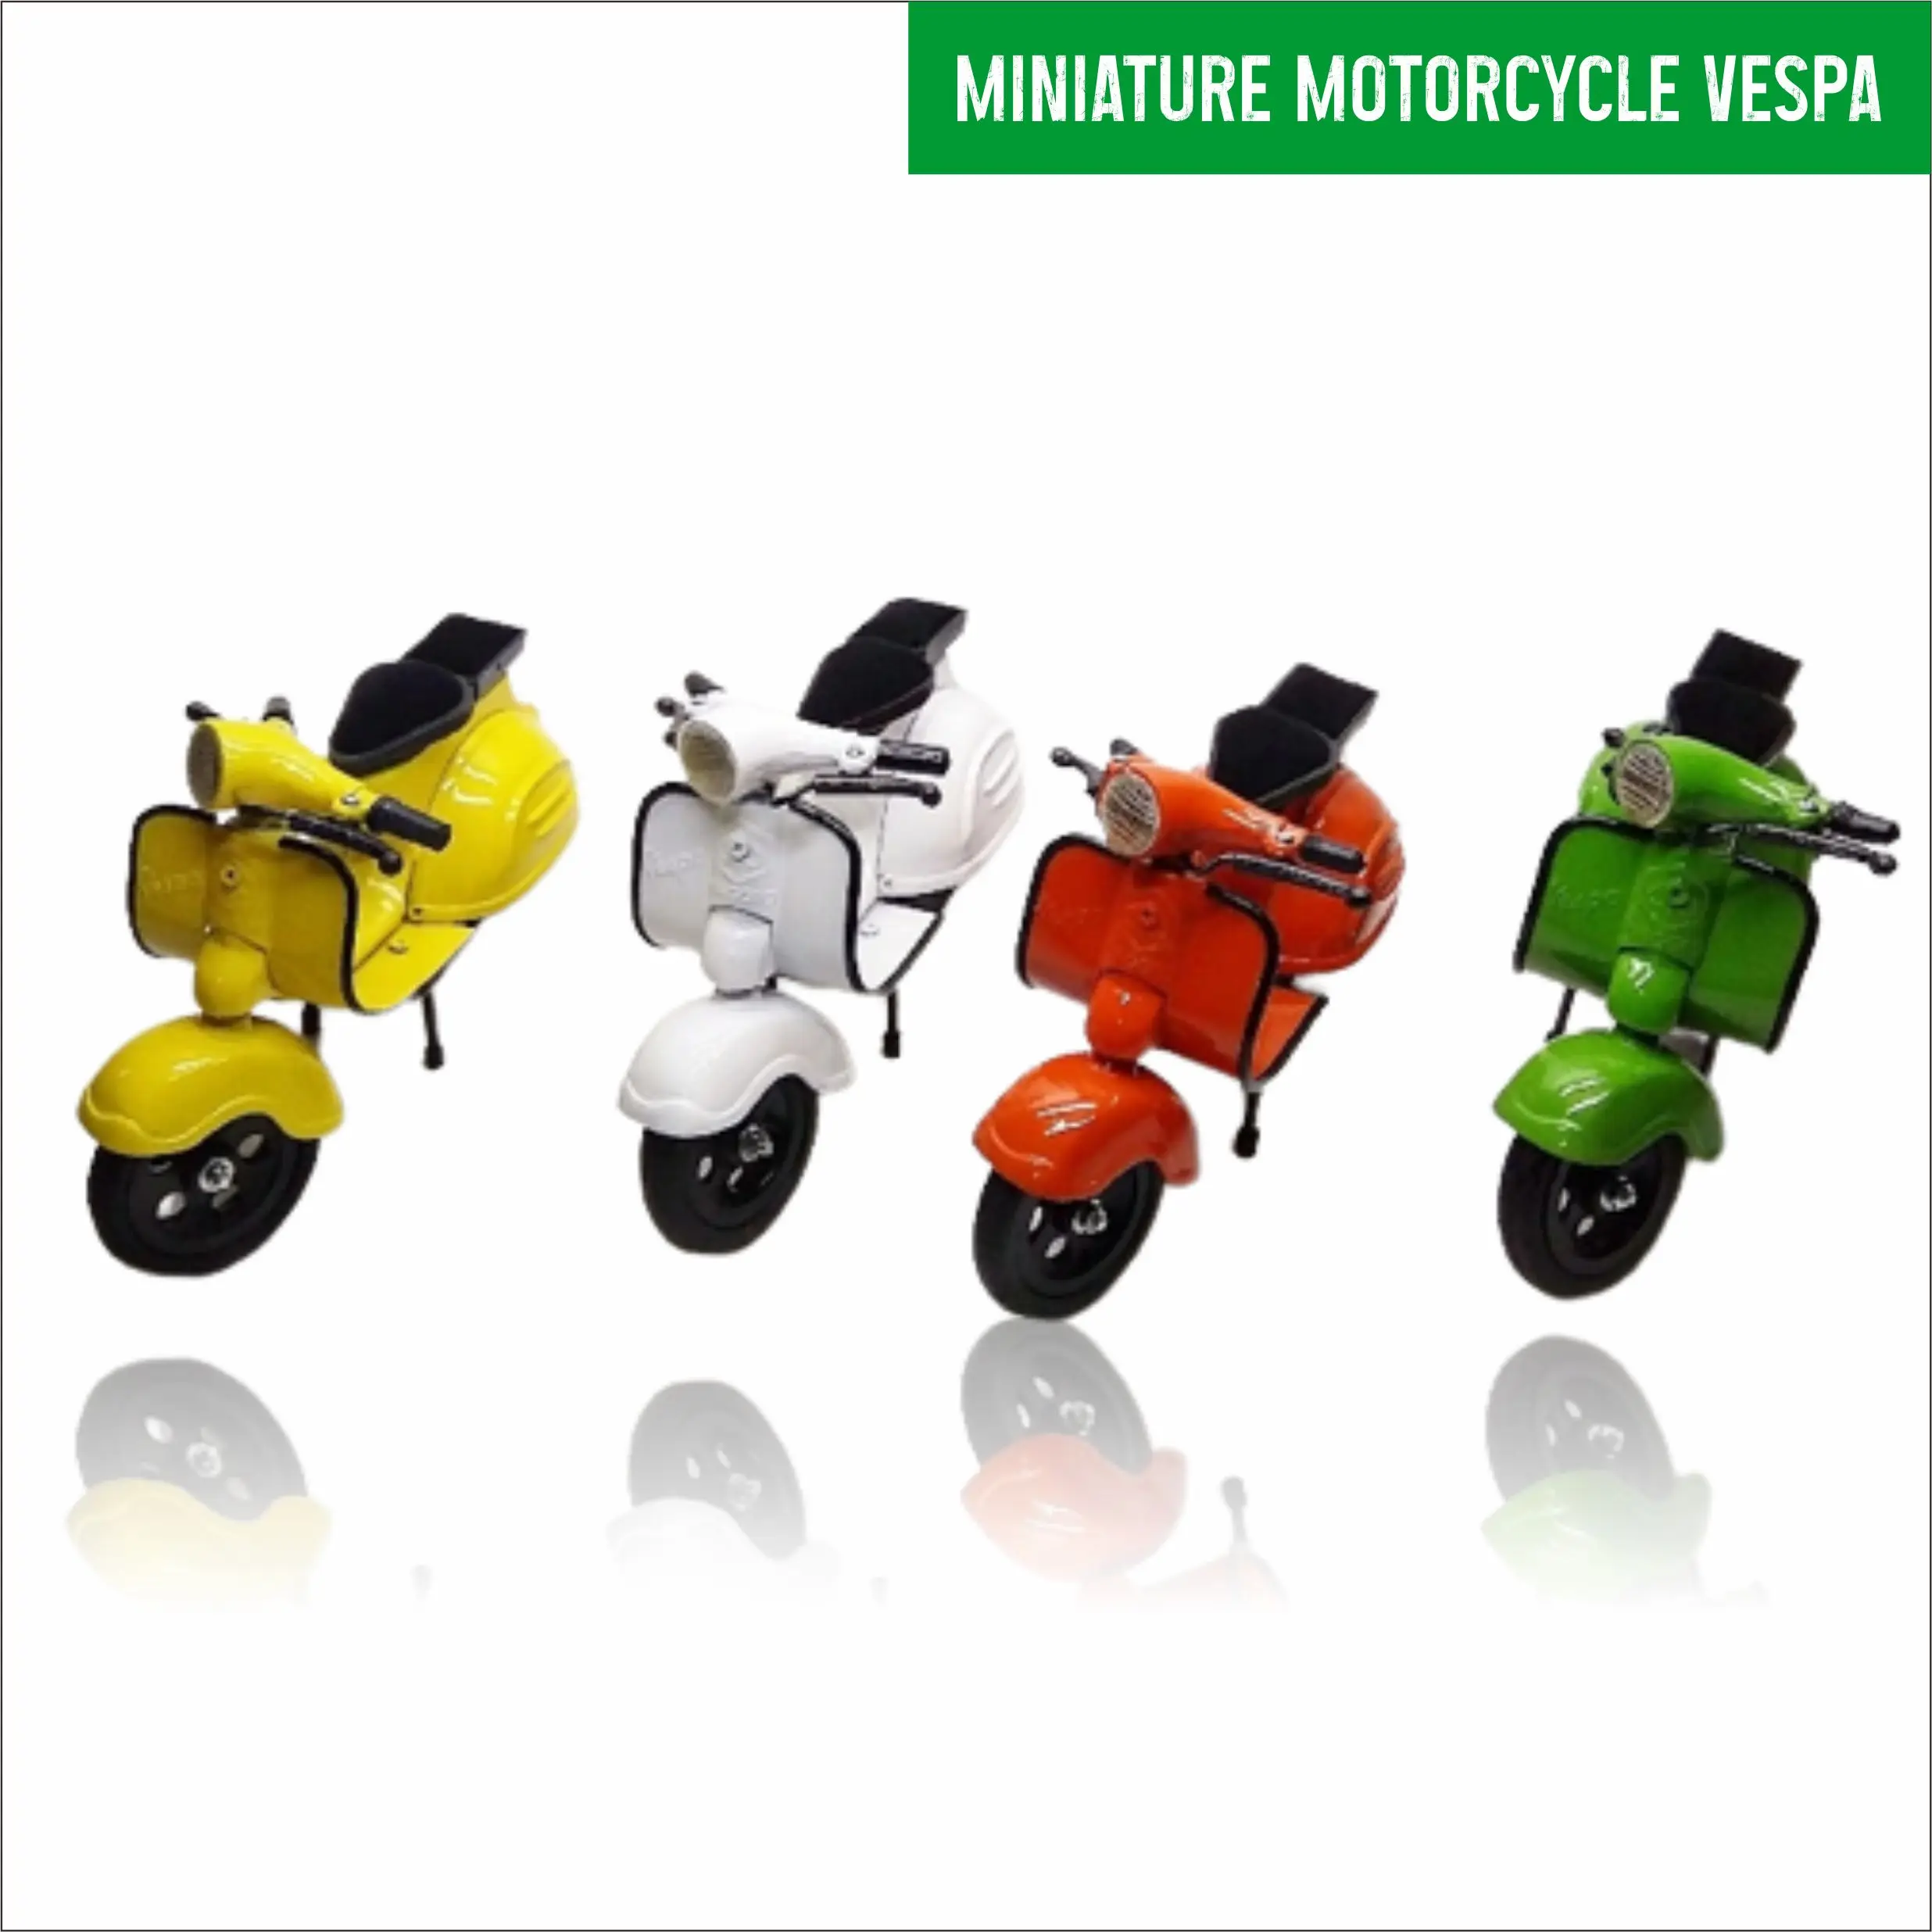 miniature metal motorcycle vespa scooter models